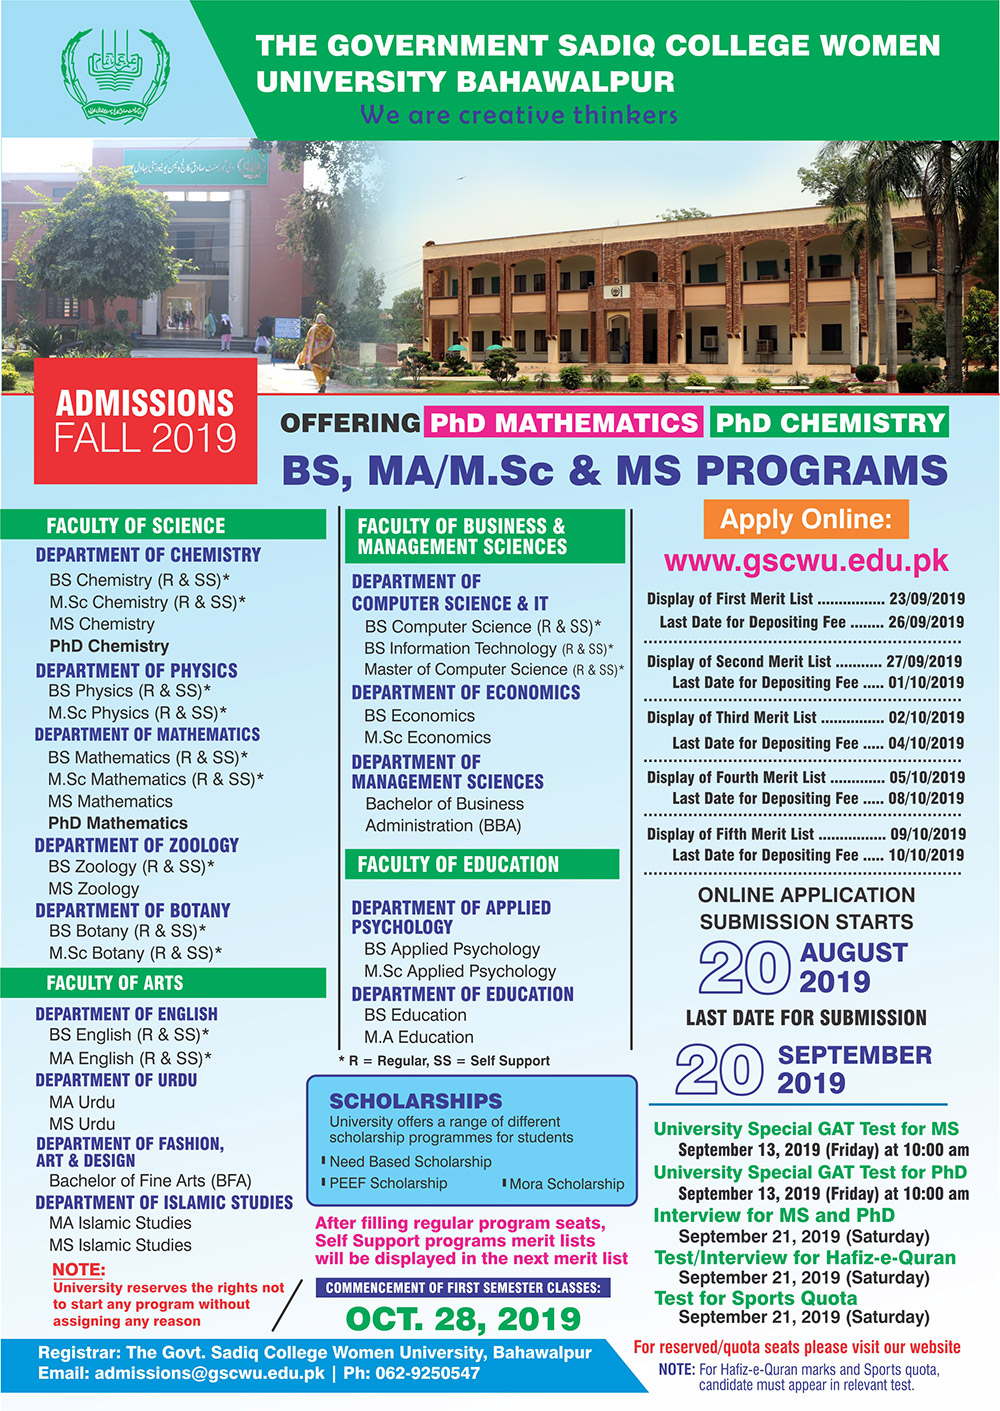 GSCWU Bahawalpur Admission 2019 Schedule, Apply Online, Merit Lists